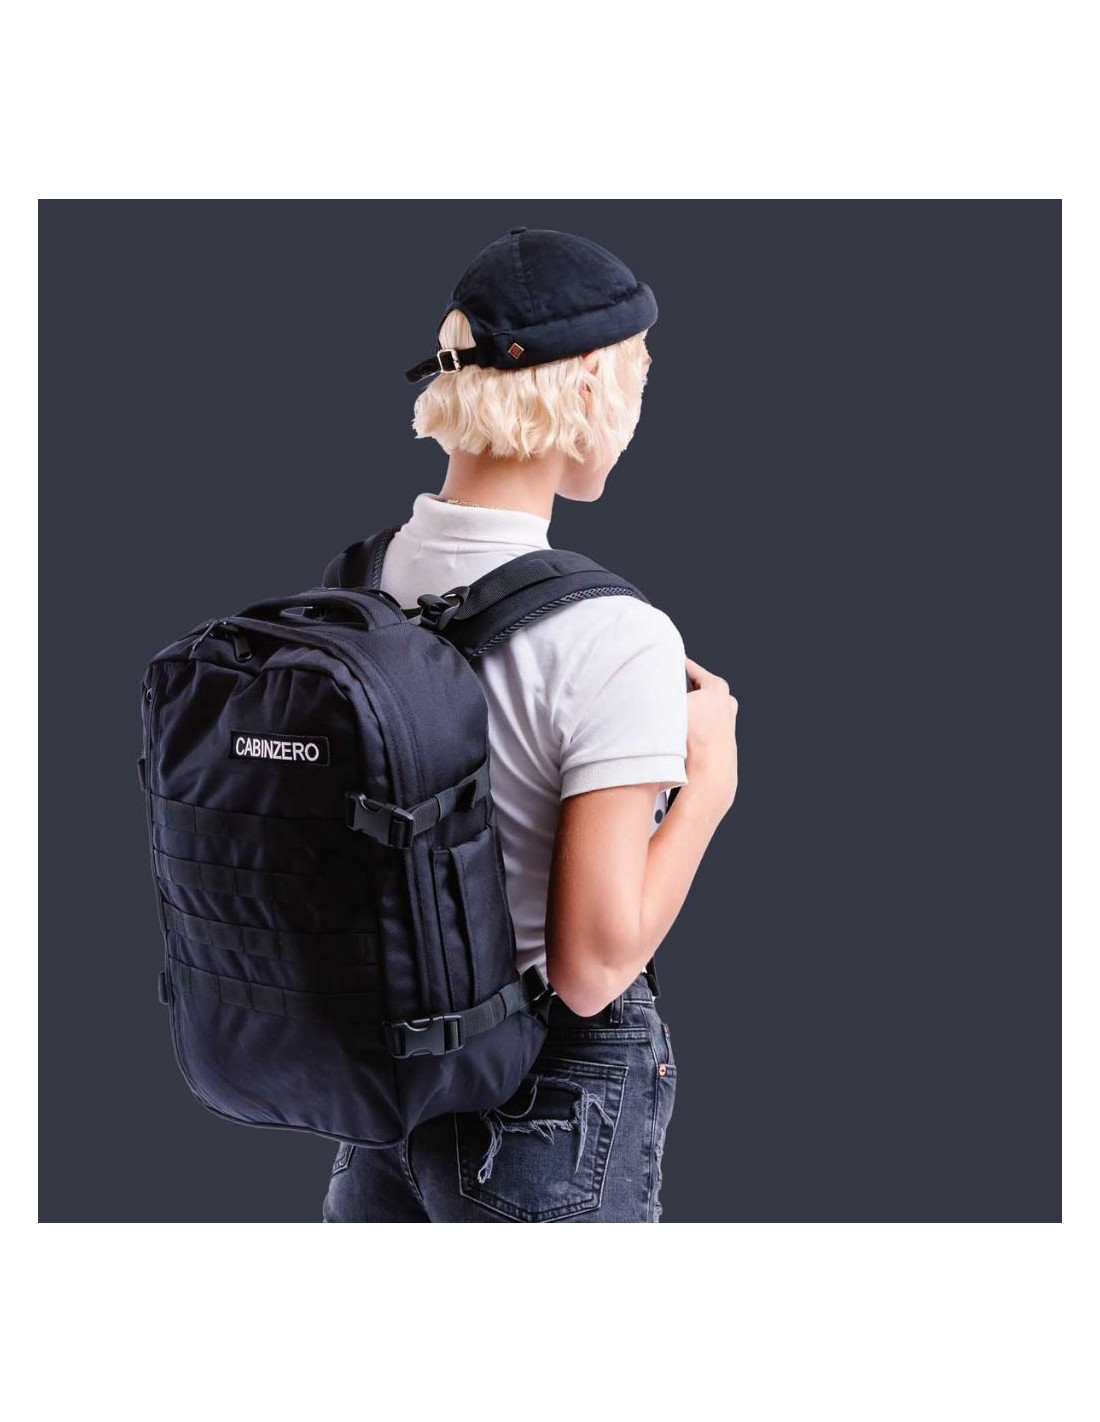 Mochila Cabin Zero 28 L. Military Tactical Backpack Absolute Black